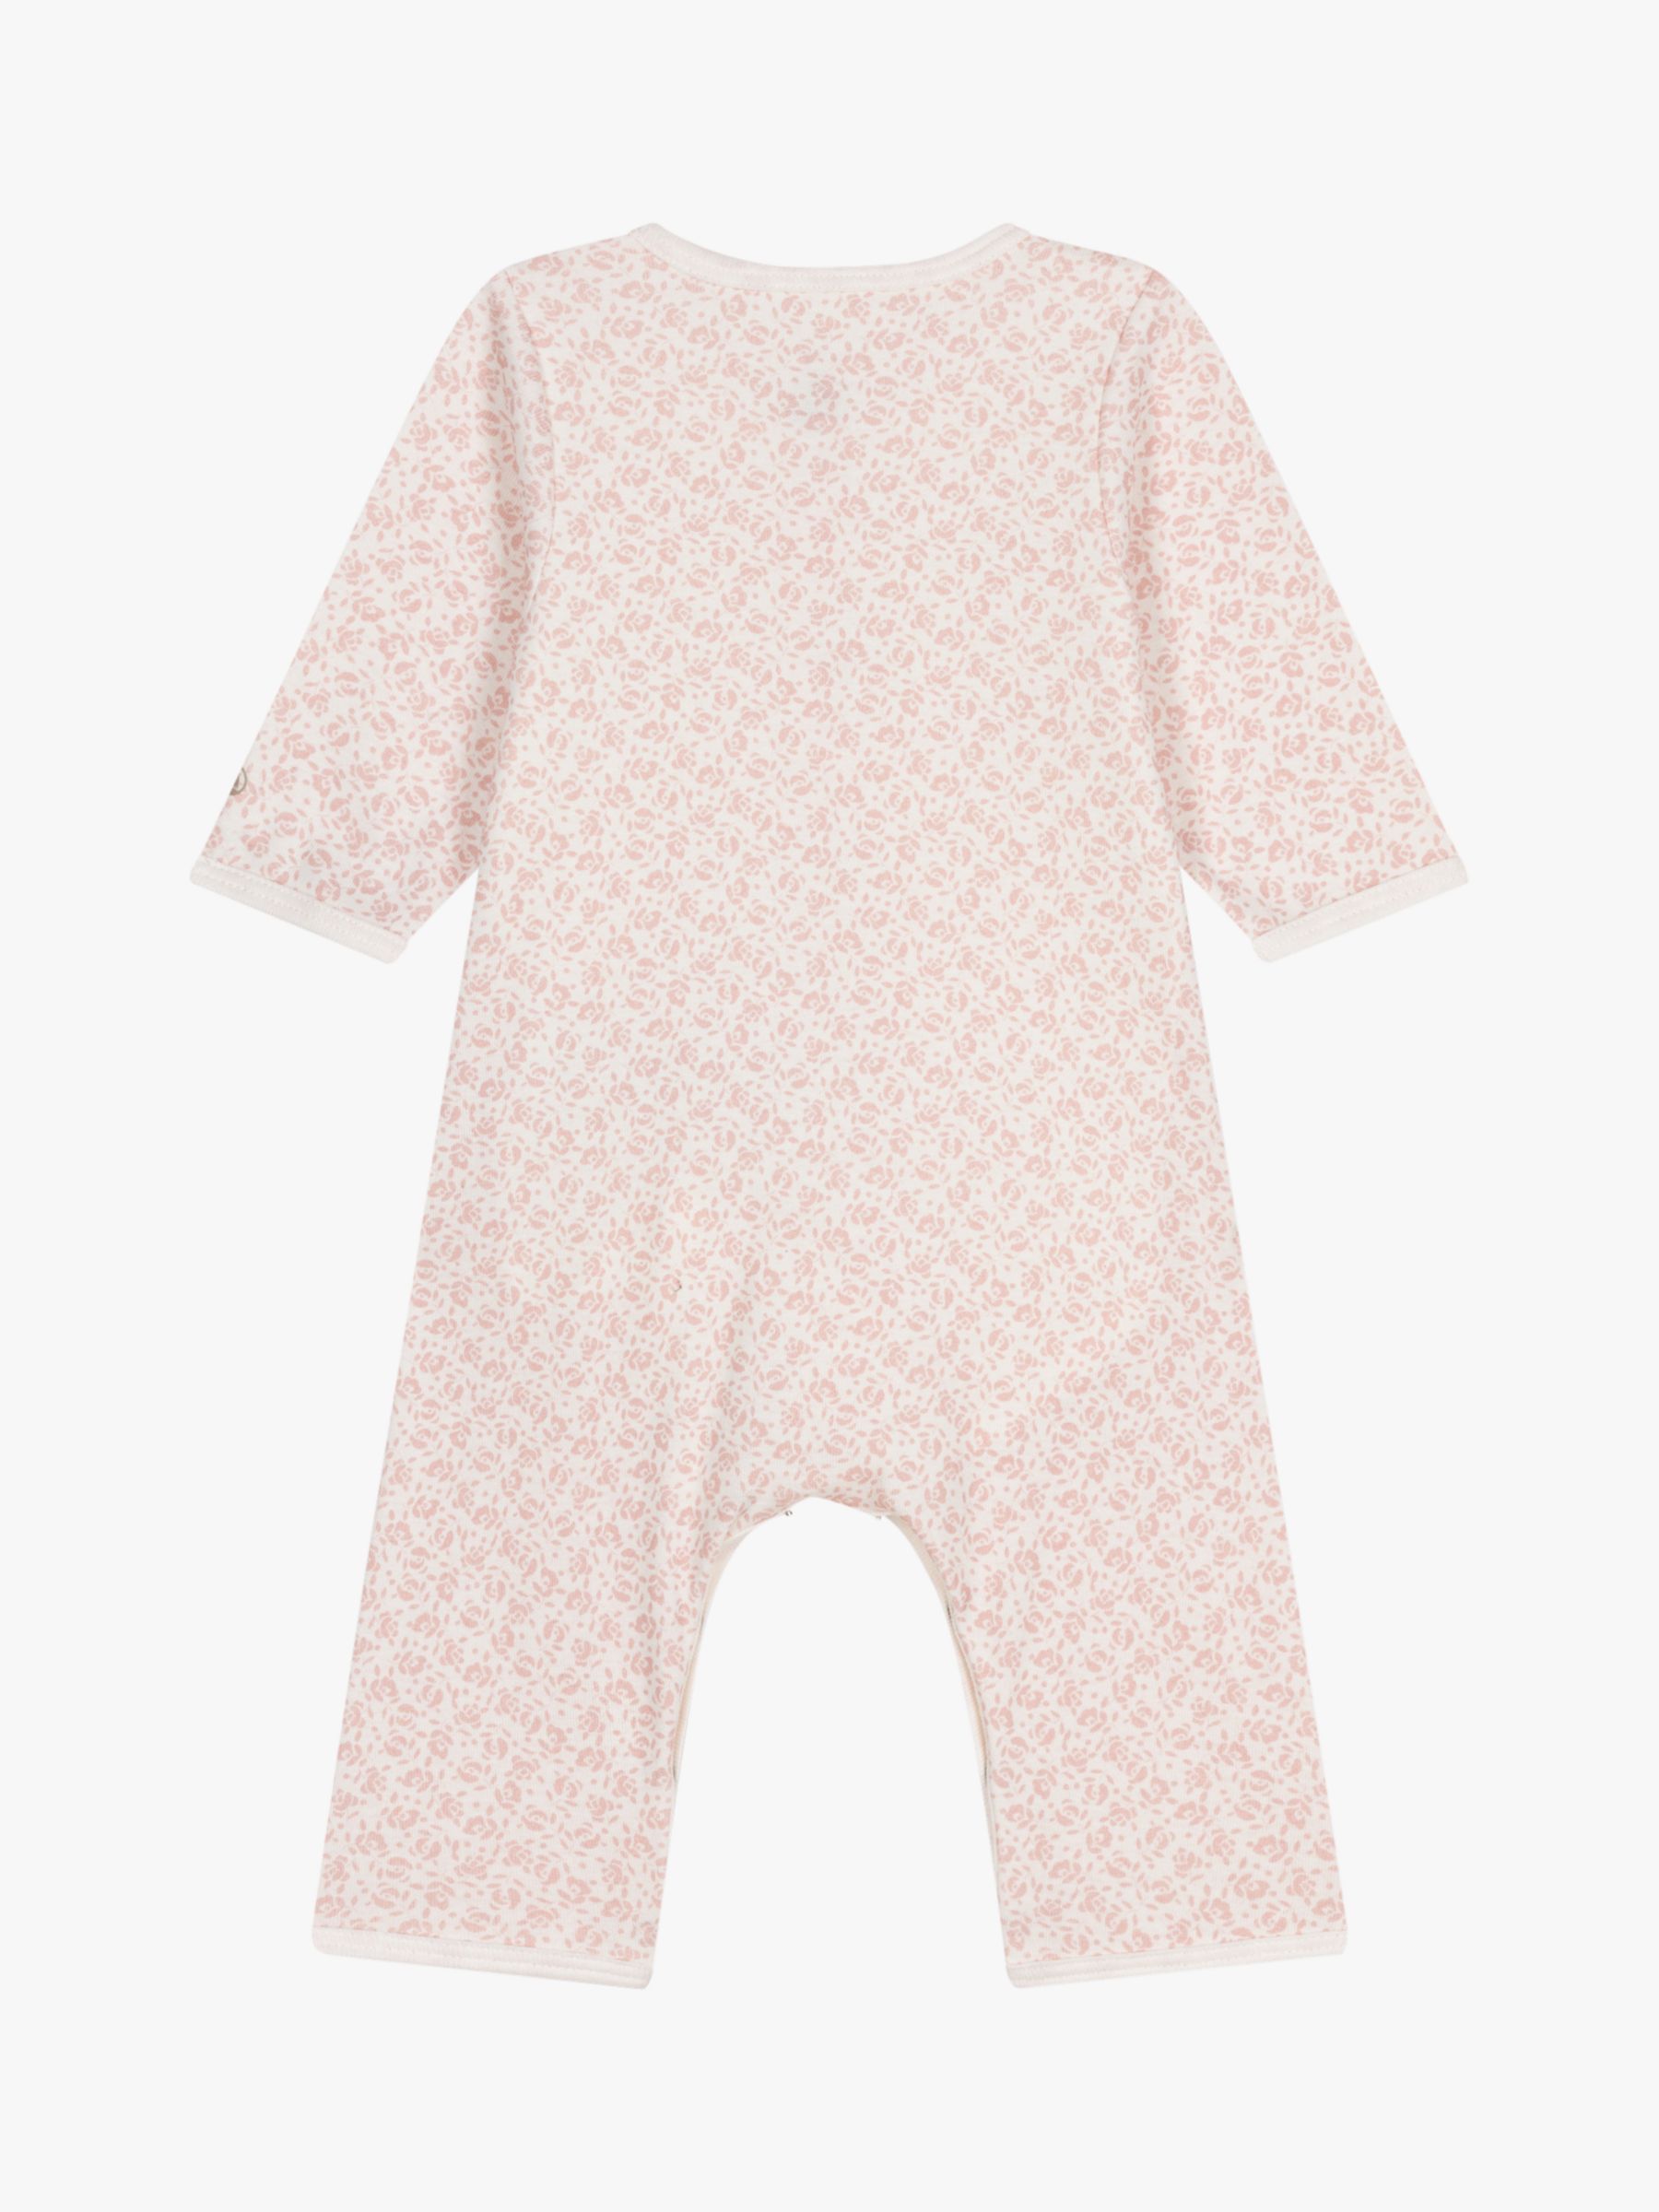 Petit Bateau Baby Footless Floral Print Bodyjama, Marshmallow/Panty, 3 months